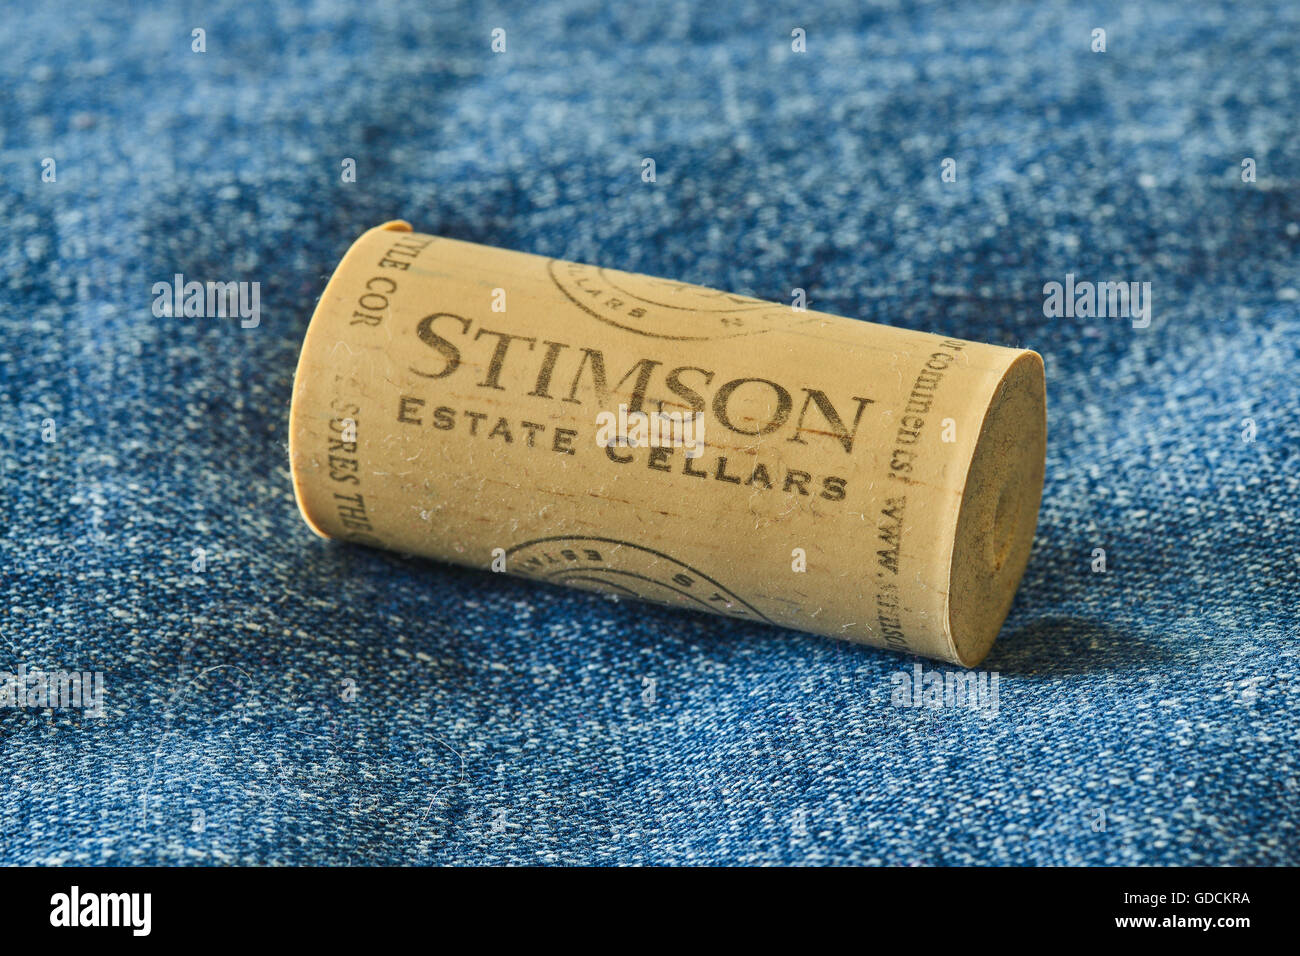 Stimson Cellars US wine cork stopper Washington State Stock Photo